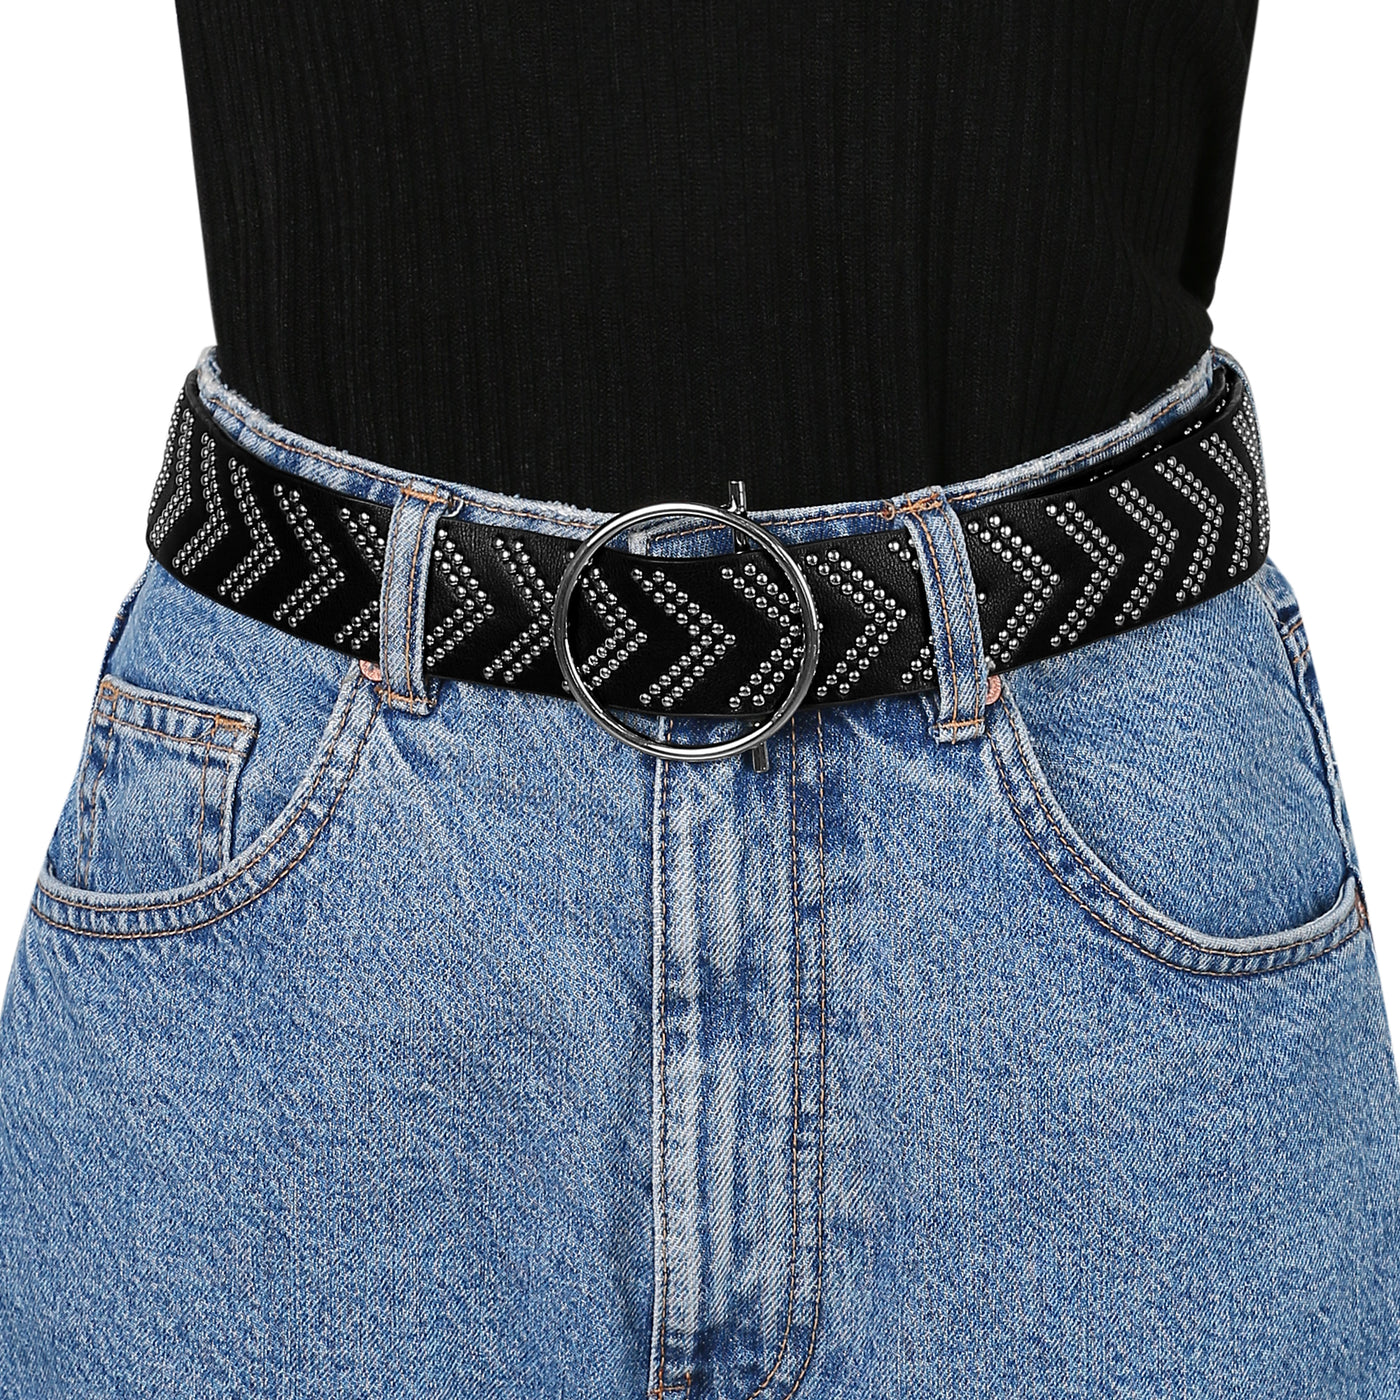 Allegra K Skinny Waist Belt for Dress Round Metal Buckle Narrow Belts